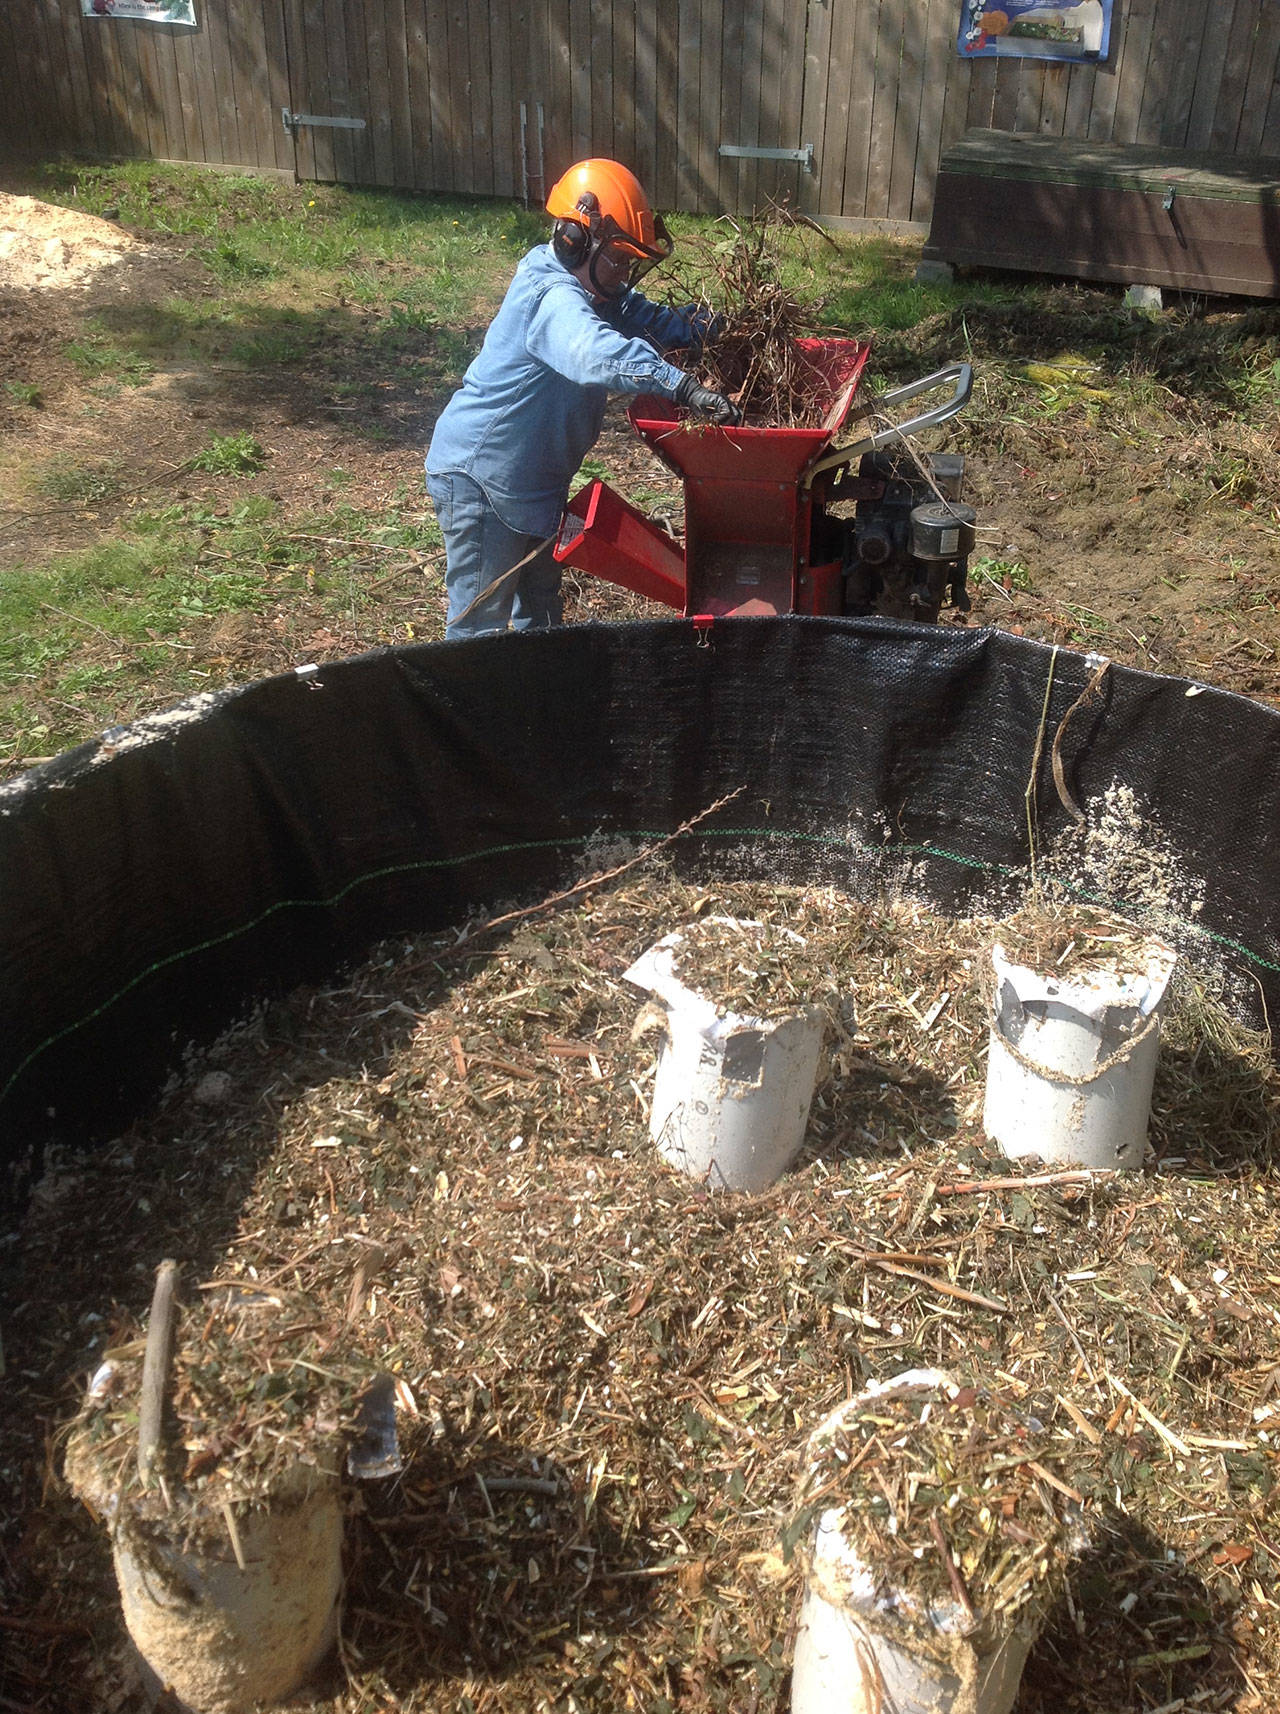 Al Cairo prepares shredded garden waste and fills the Johnson-Su composting bioreactor at Woodcock Garden. Photo courtesy of Al Cairo